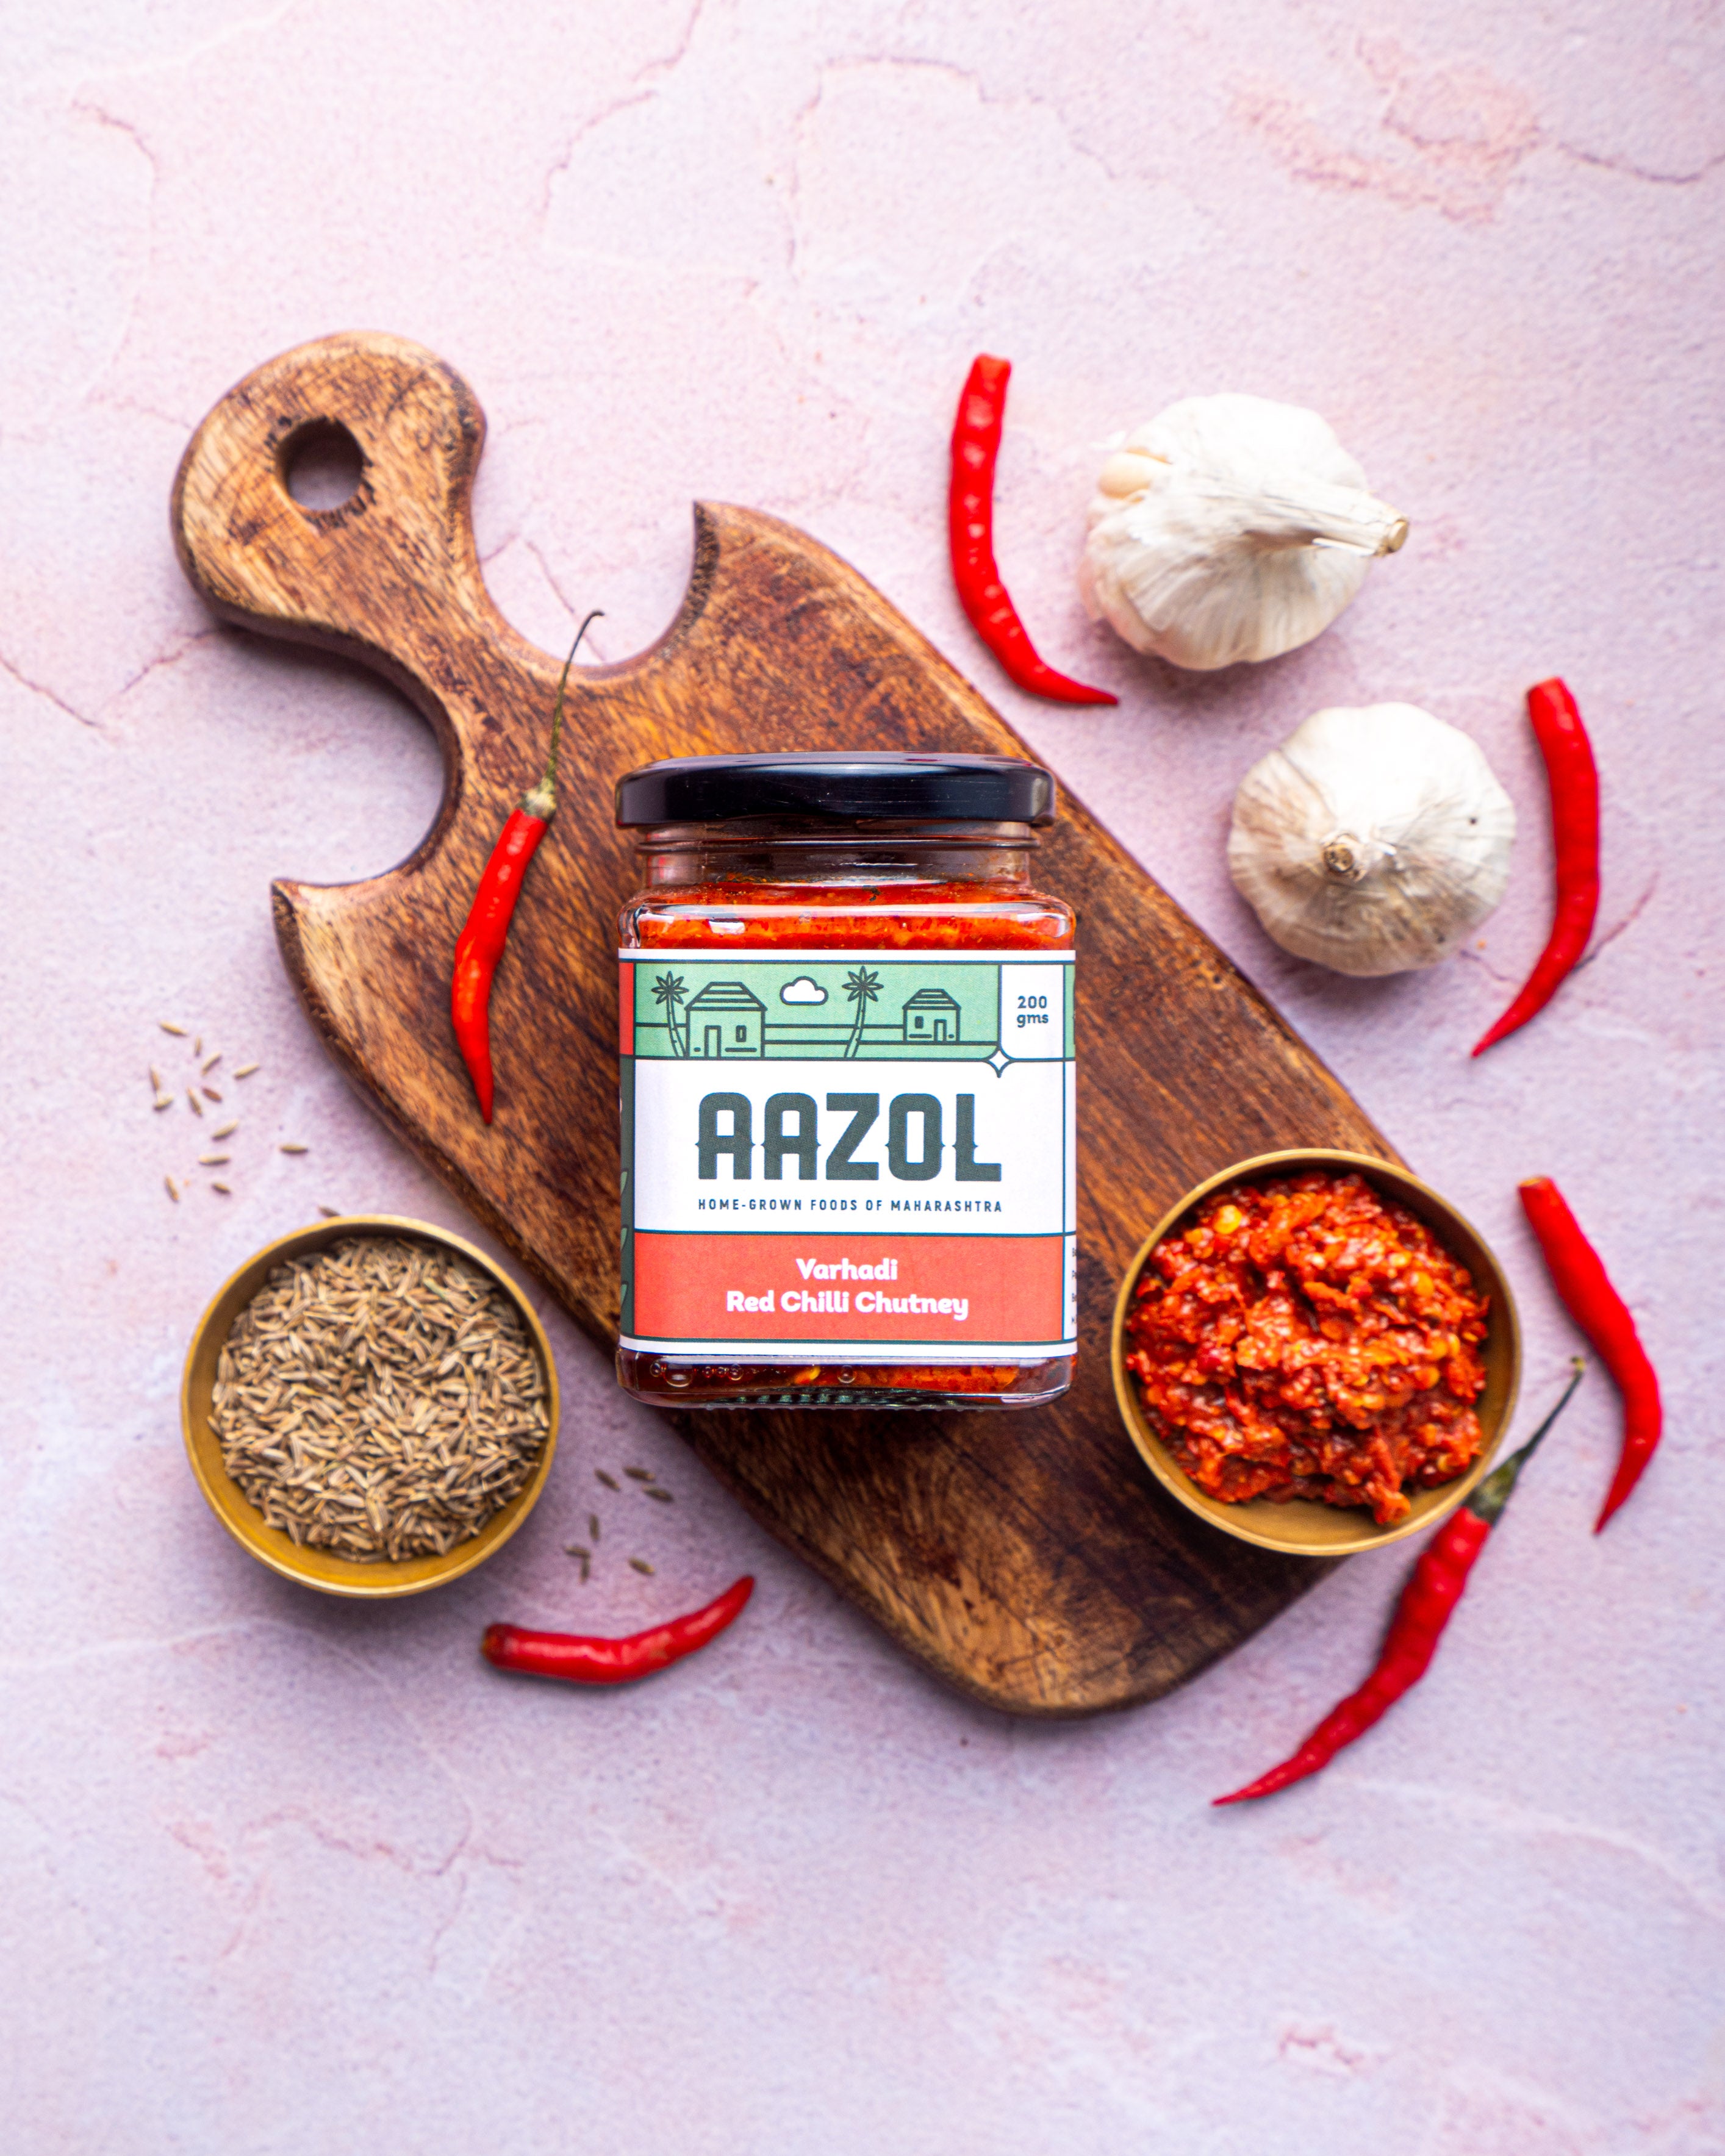 Aazol Varhadi Spicy Red Chilli Chutney - 200gms (Pack of 2)